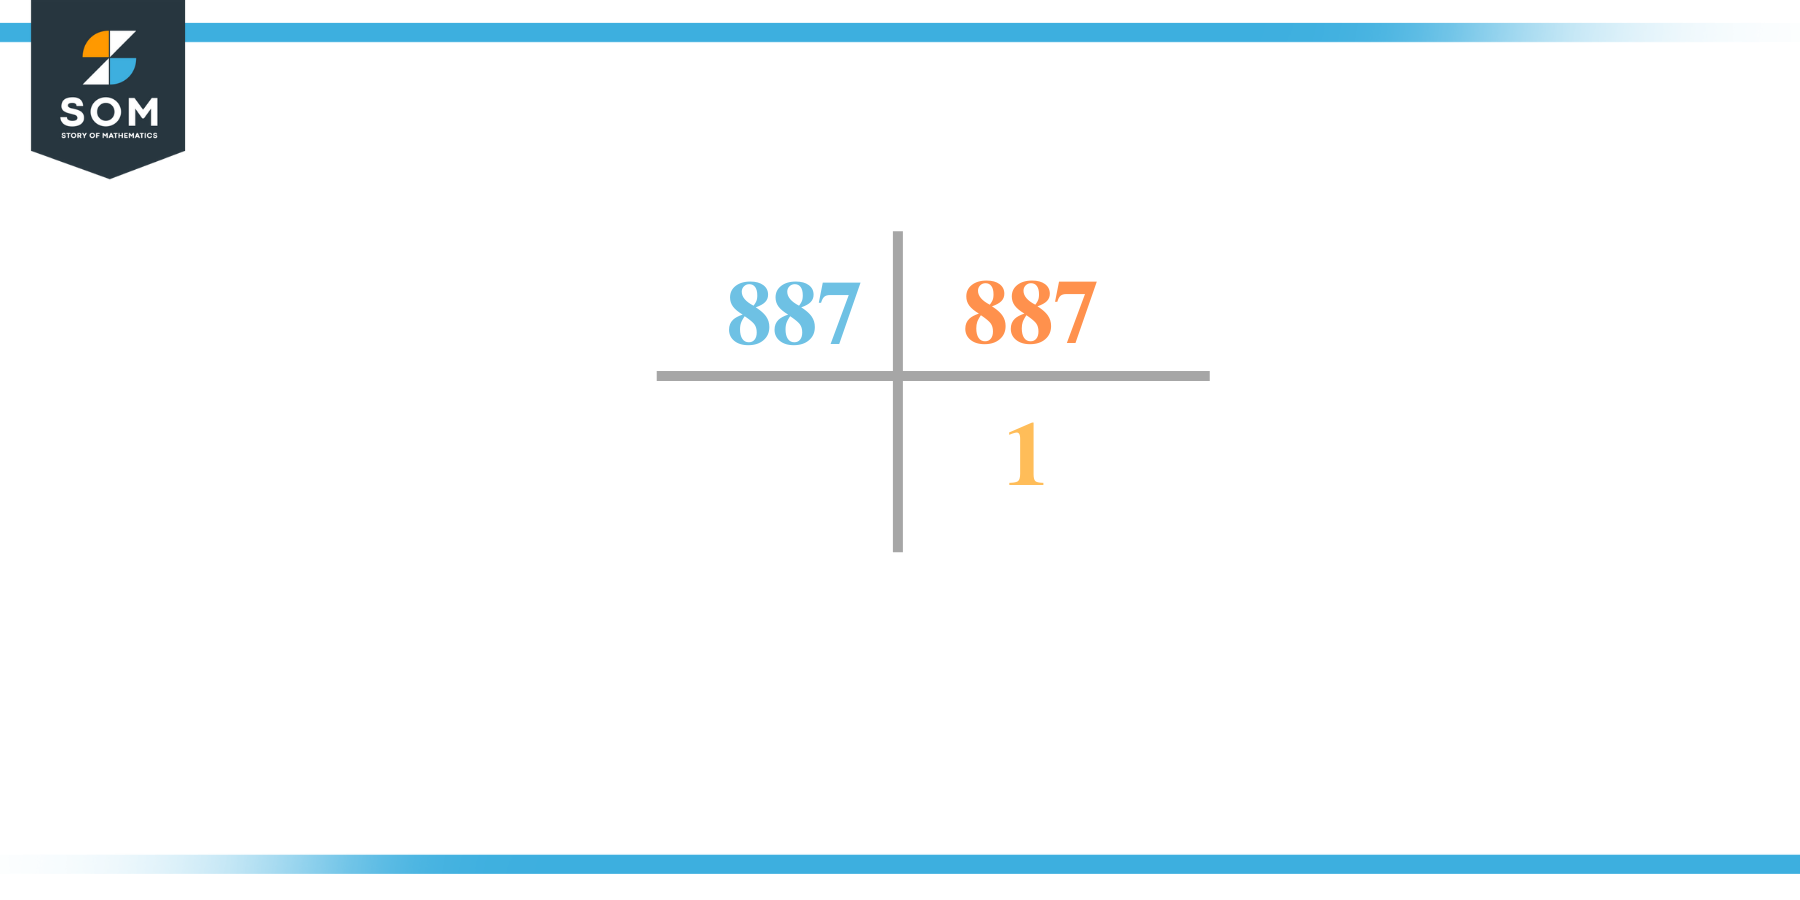 Prime factorization of 887